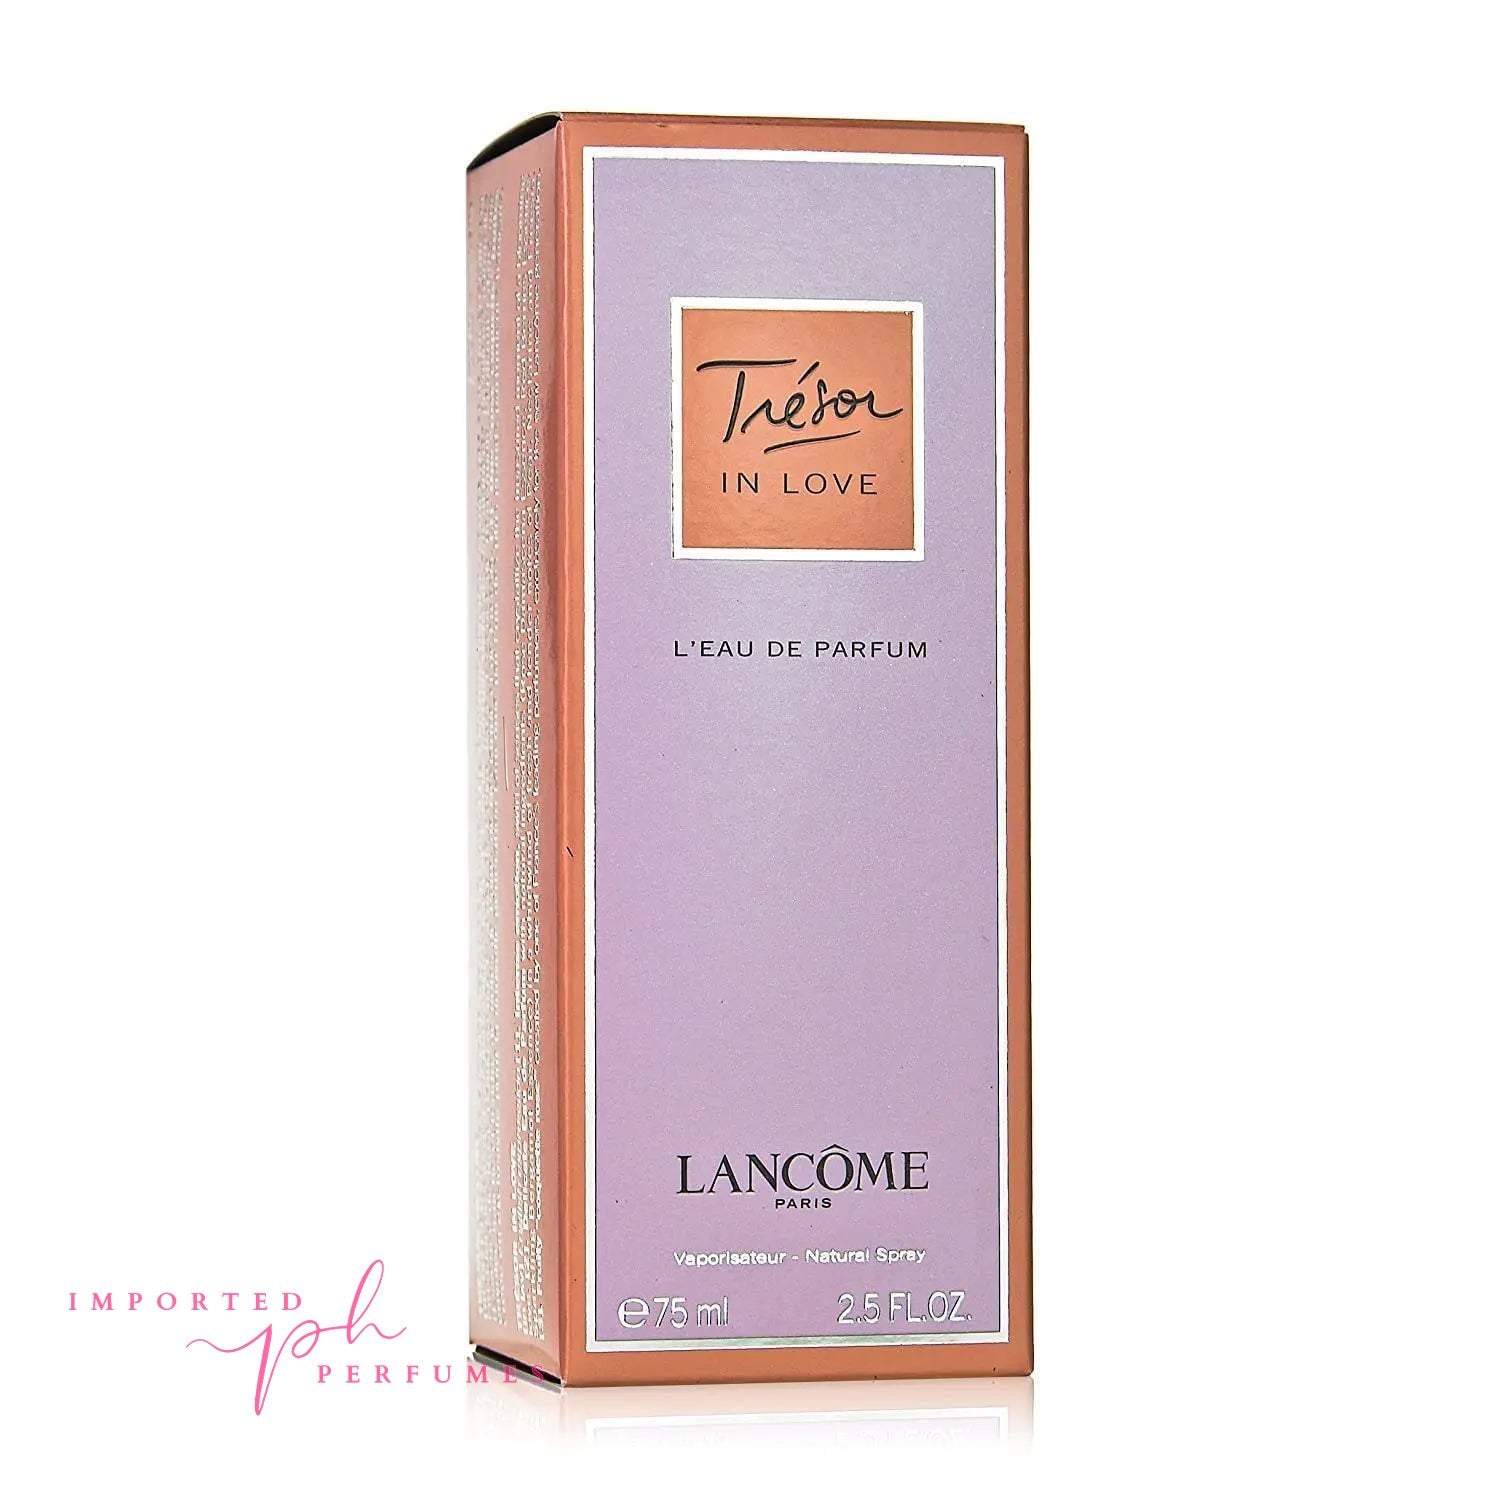 Lancome Tresor In Love Eau de Parfum 75ml-Imported Perfumes Co-In love,lancome,tresor,women